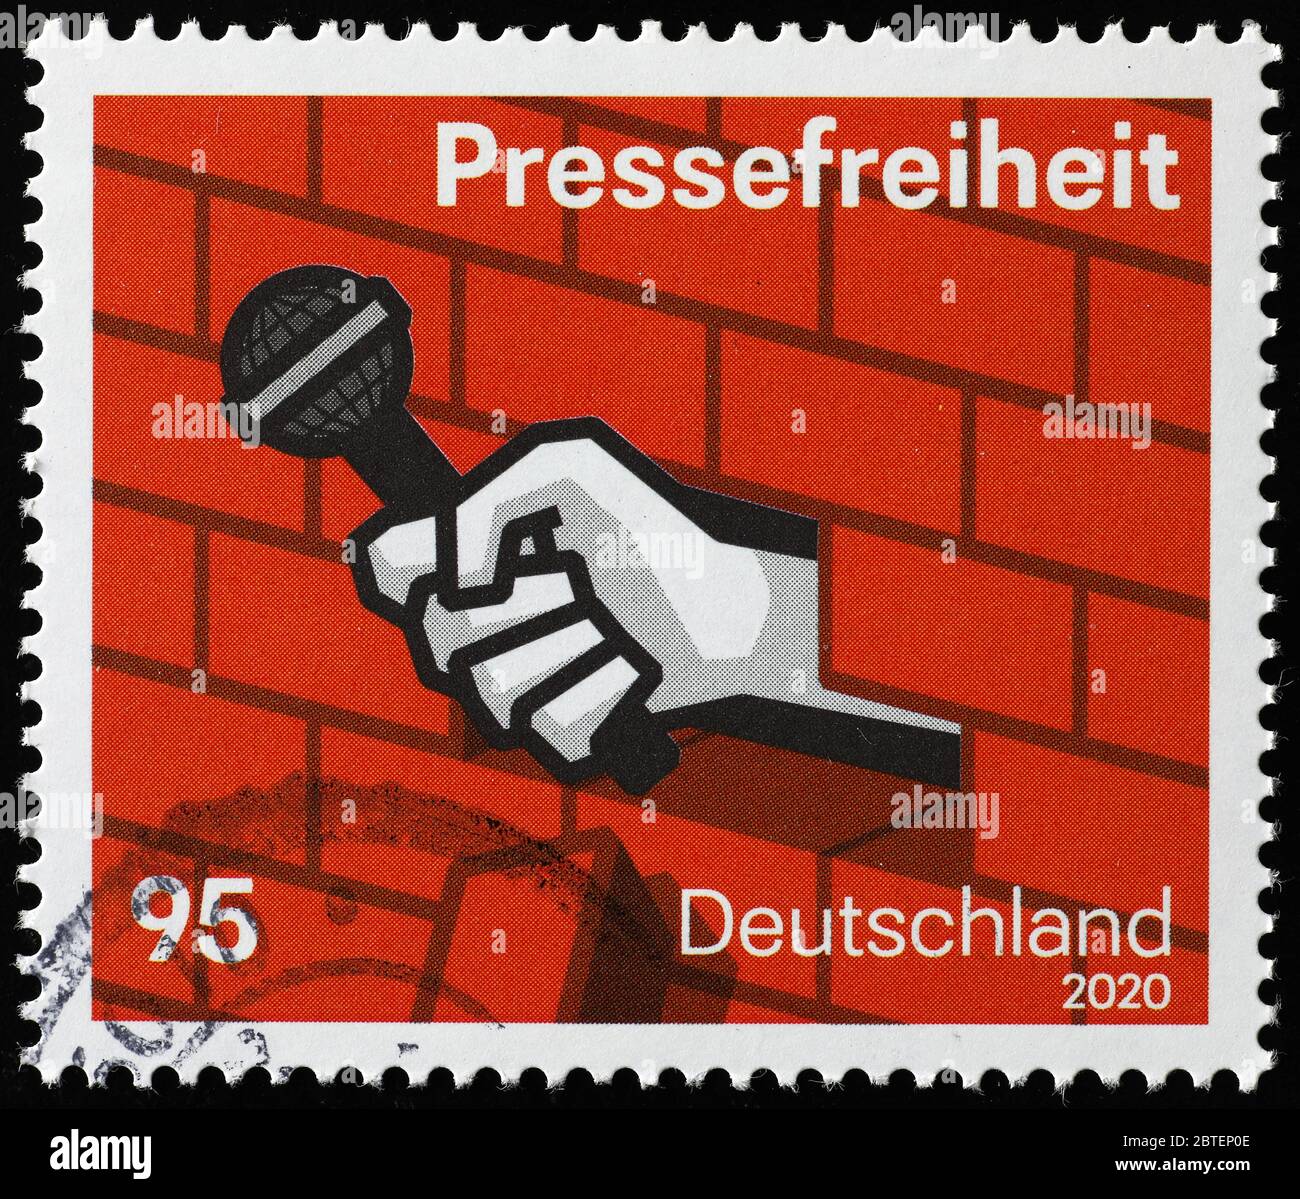 German postage stamp celebrating Freedom of the press Stock Photo